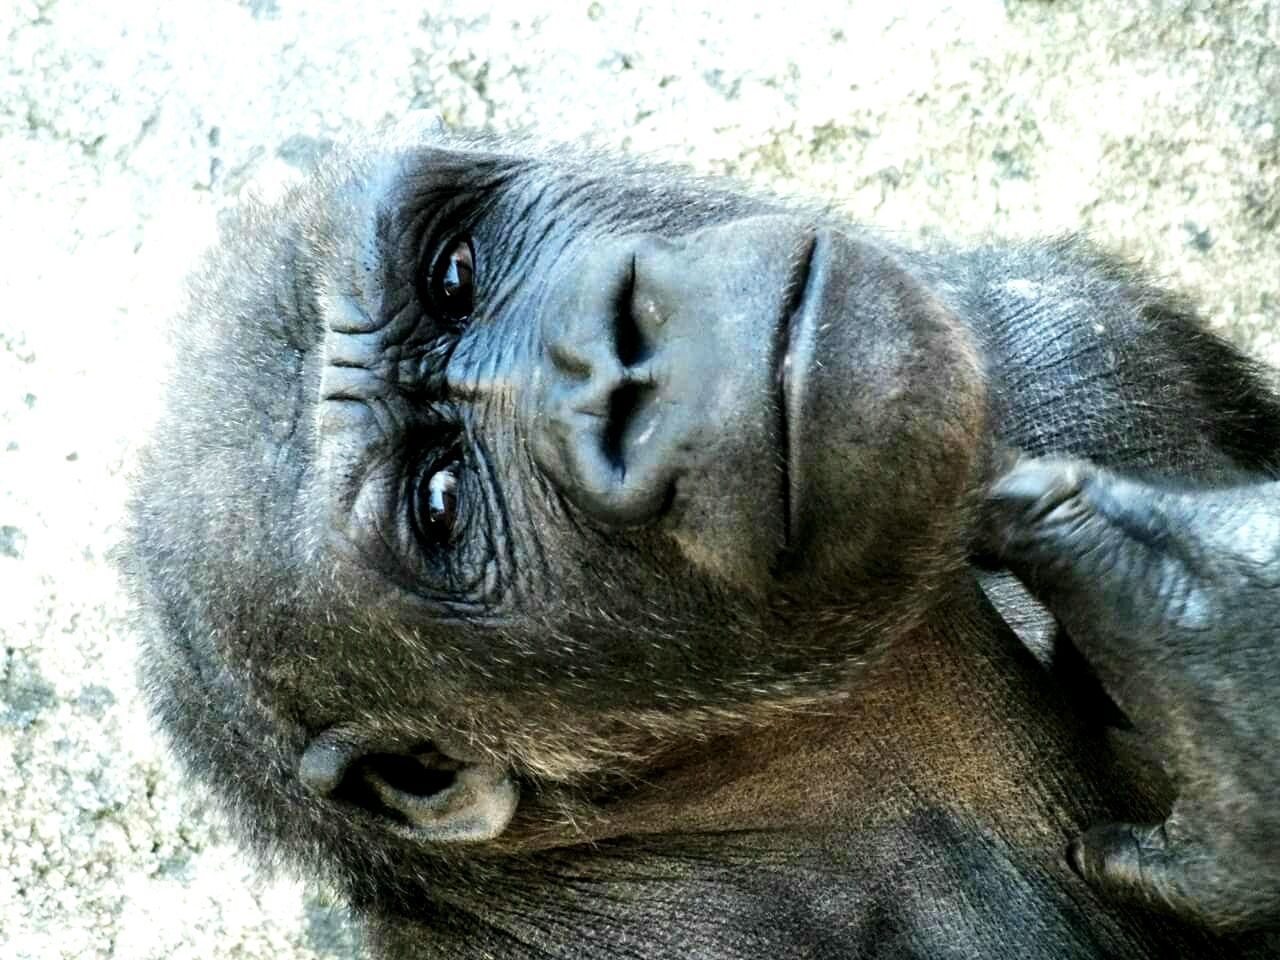 Portrait of old gorilla